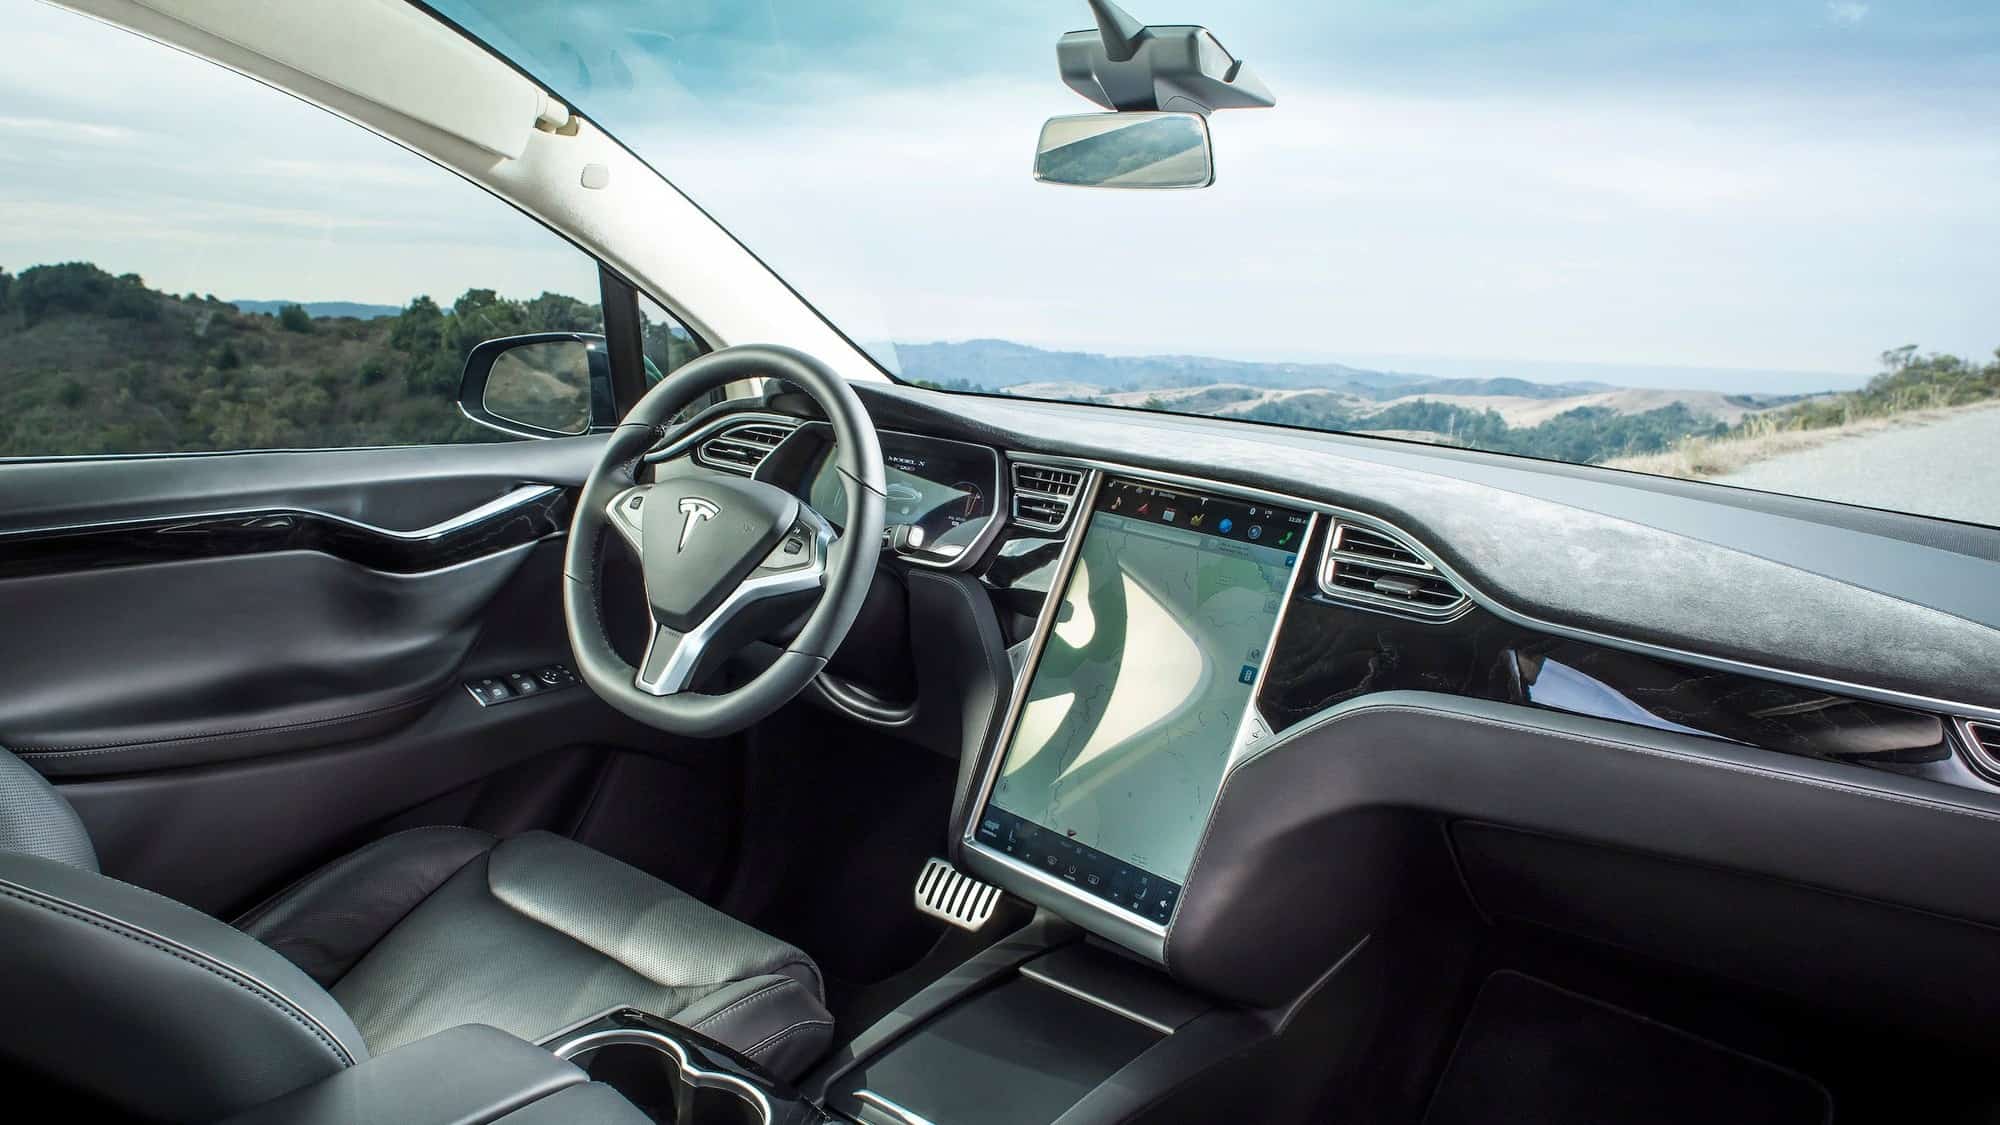 Inside of a Tesla self-driving car